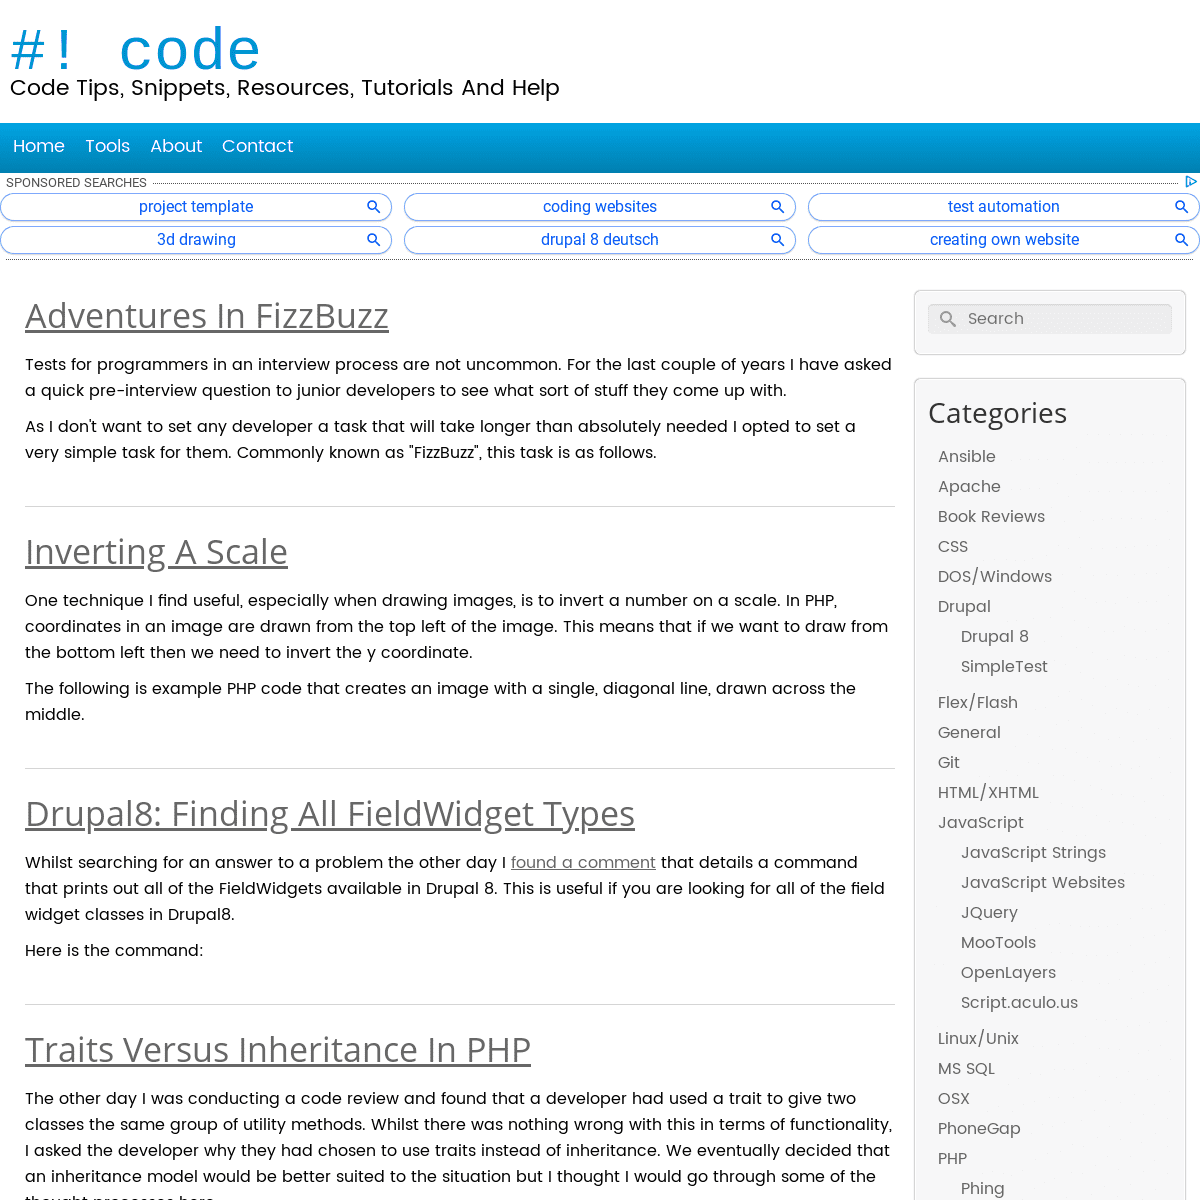 A complete backup of hashbangcode.com